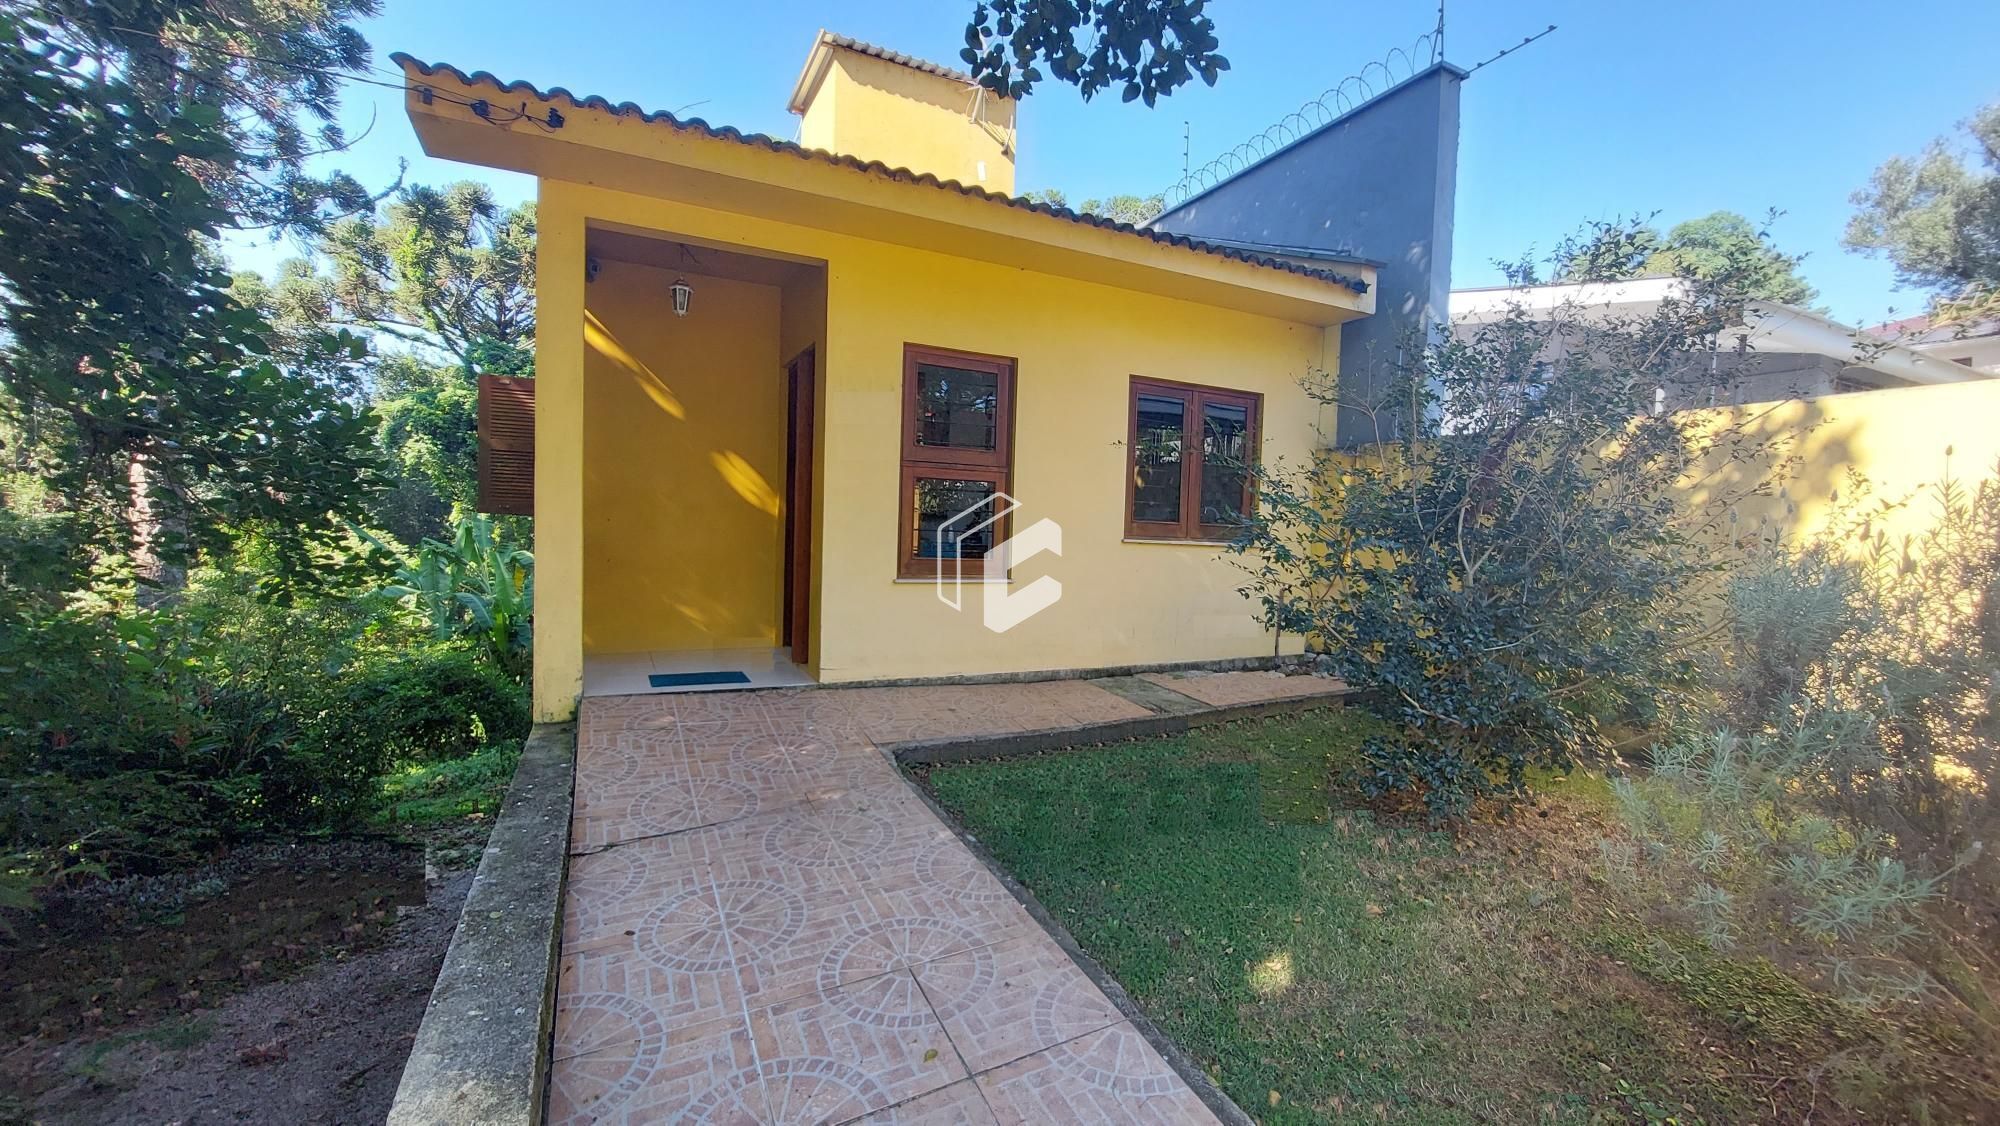 Casa, 1 quarto, 70 m² - Foto 1